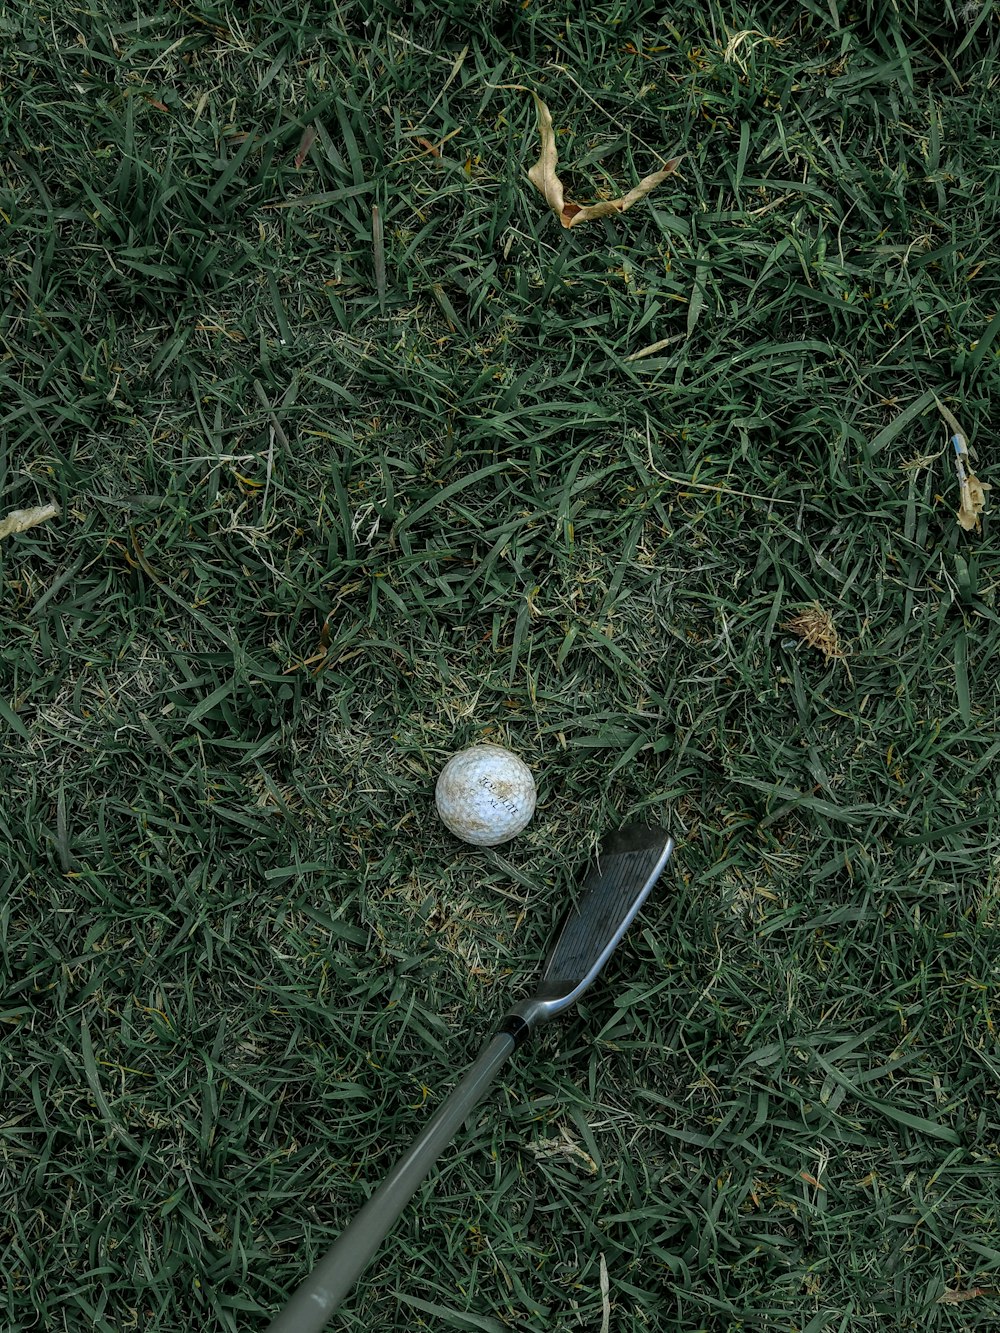 silver golf club on green grass field